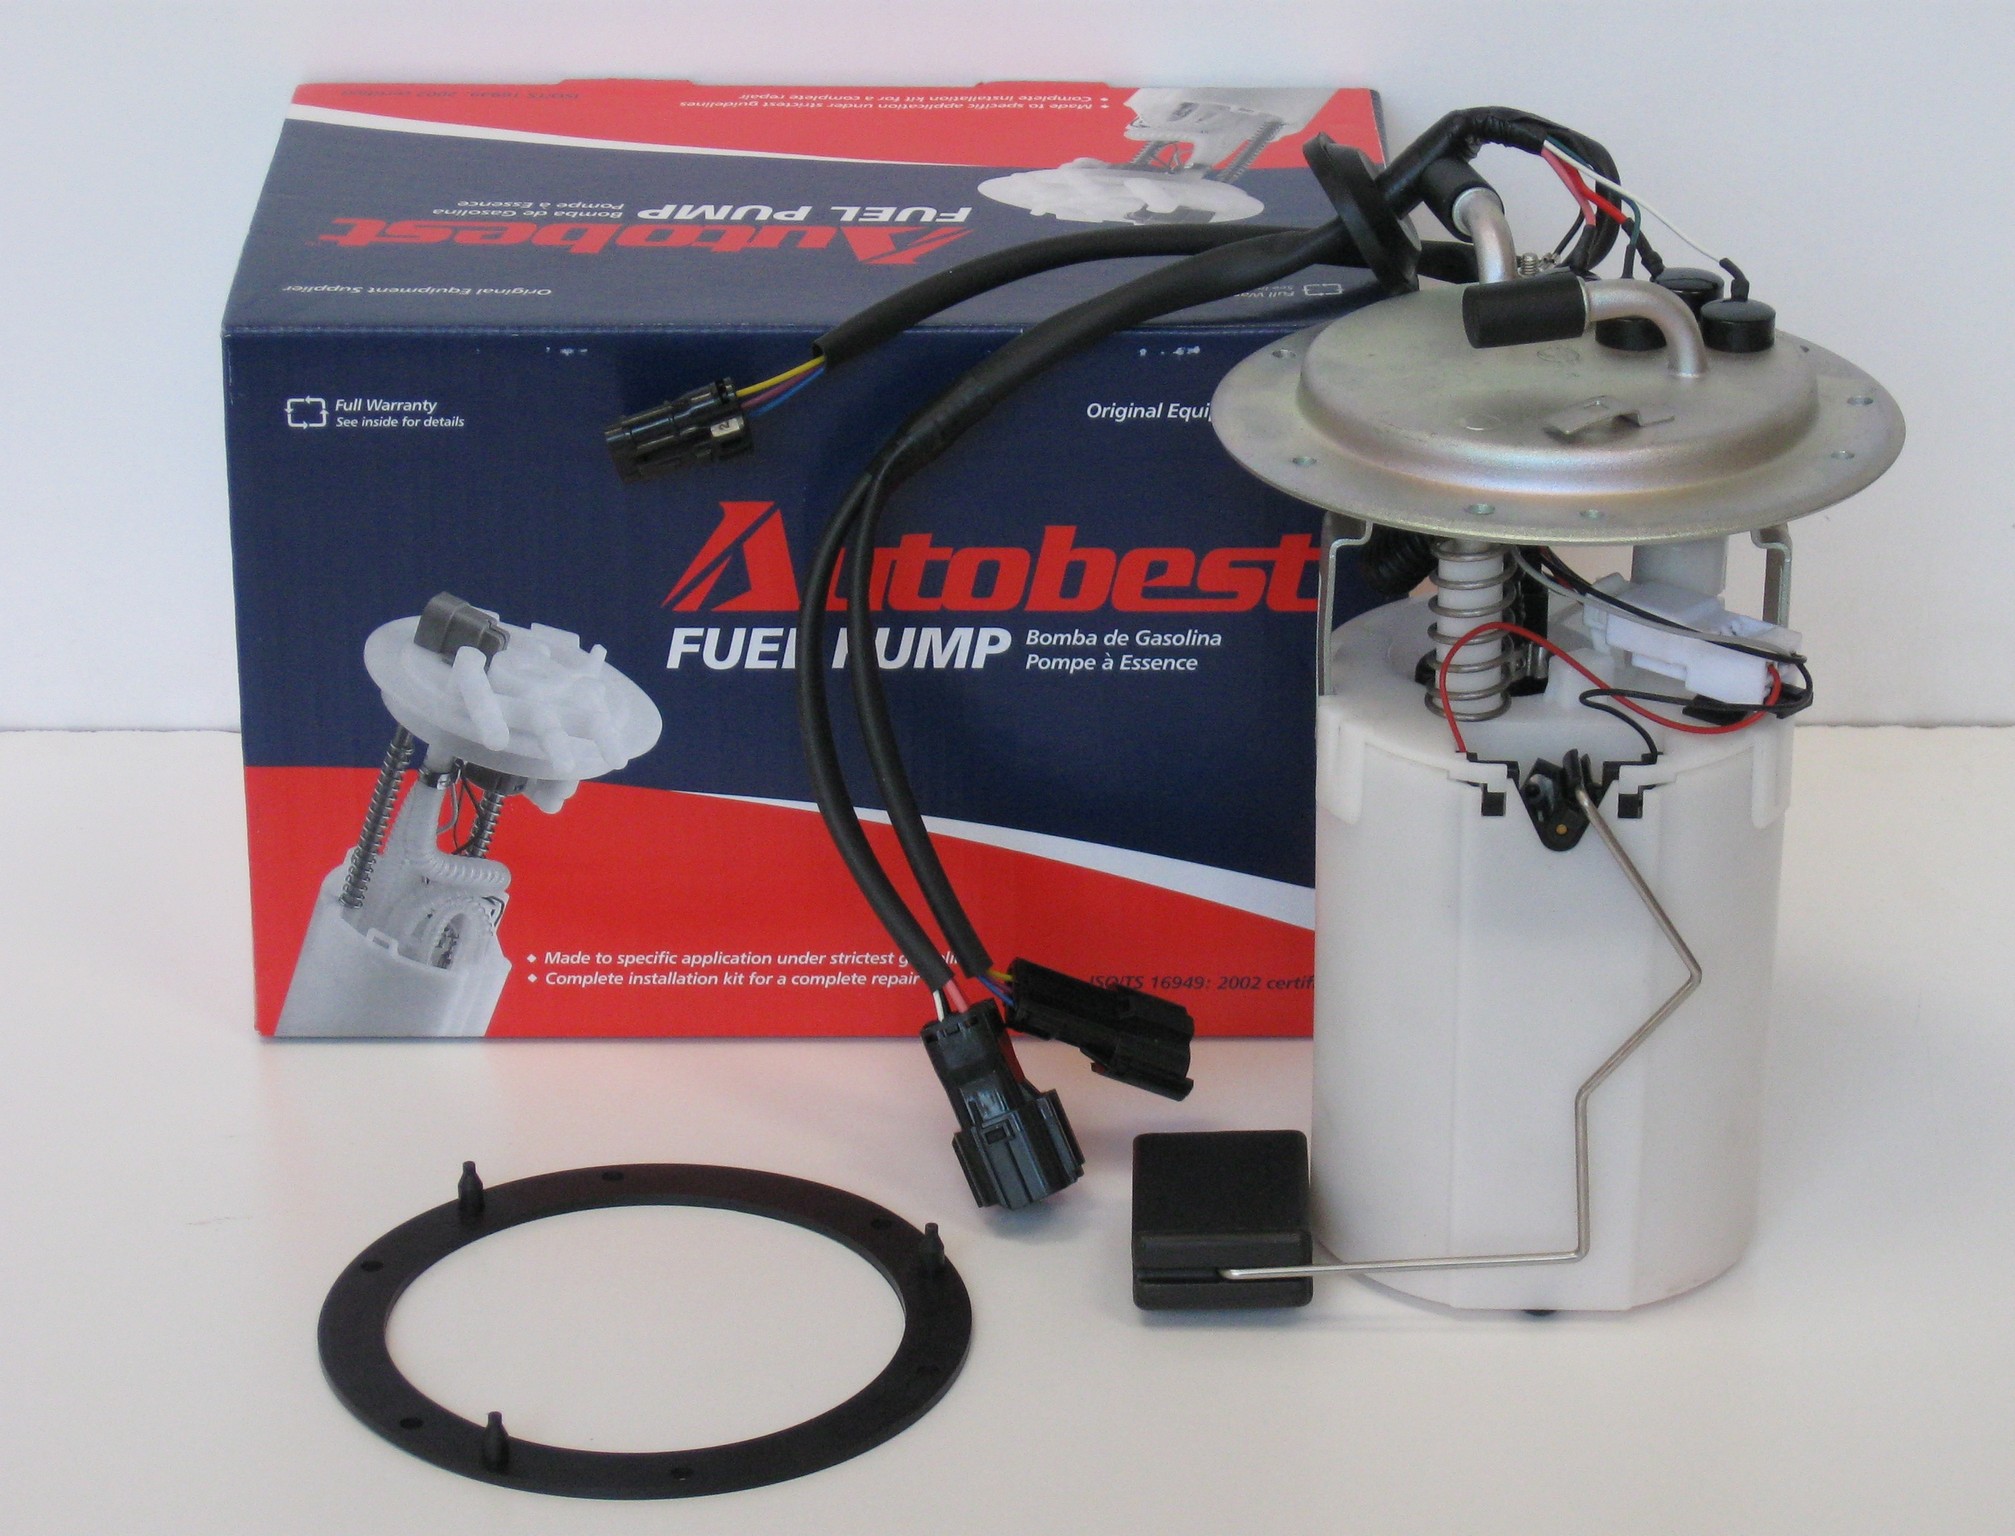 Autobest Quality Electric Fuel Pumps